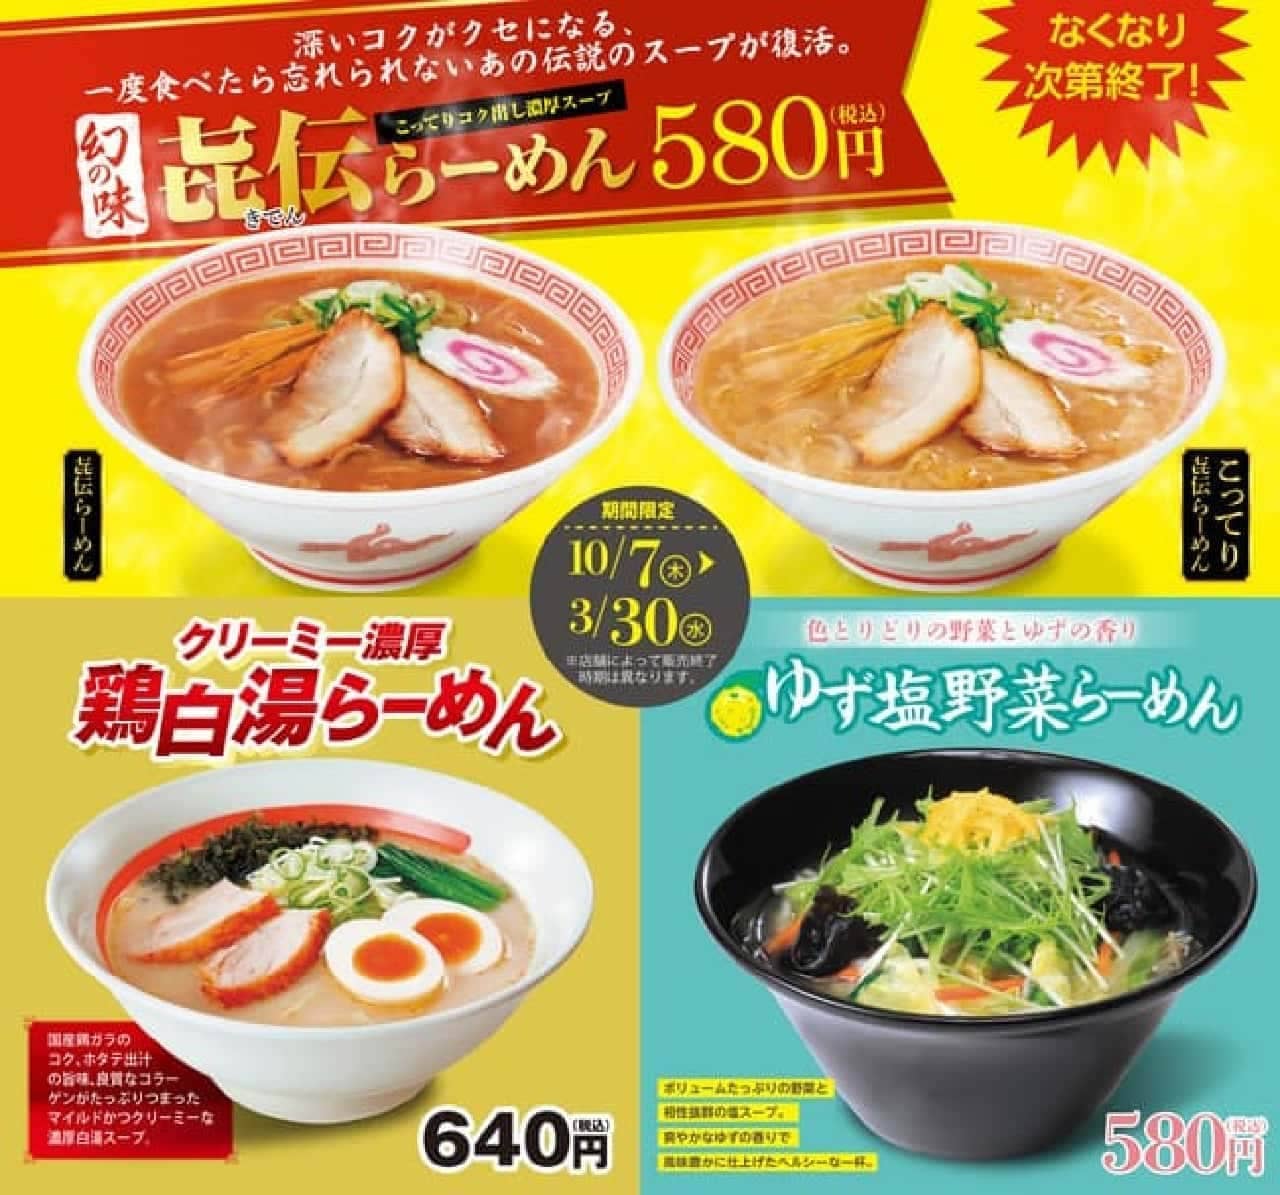 Kourakuen "Kiden Ramen" "Creamy Rich Chicken Shirayu Ramen" "Yuzu Salt Vegetable Ramen"